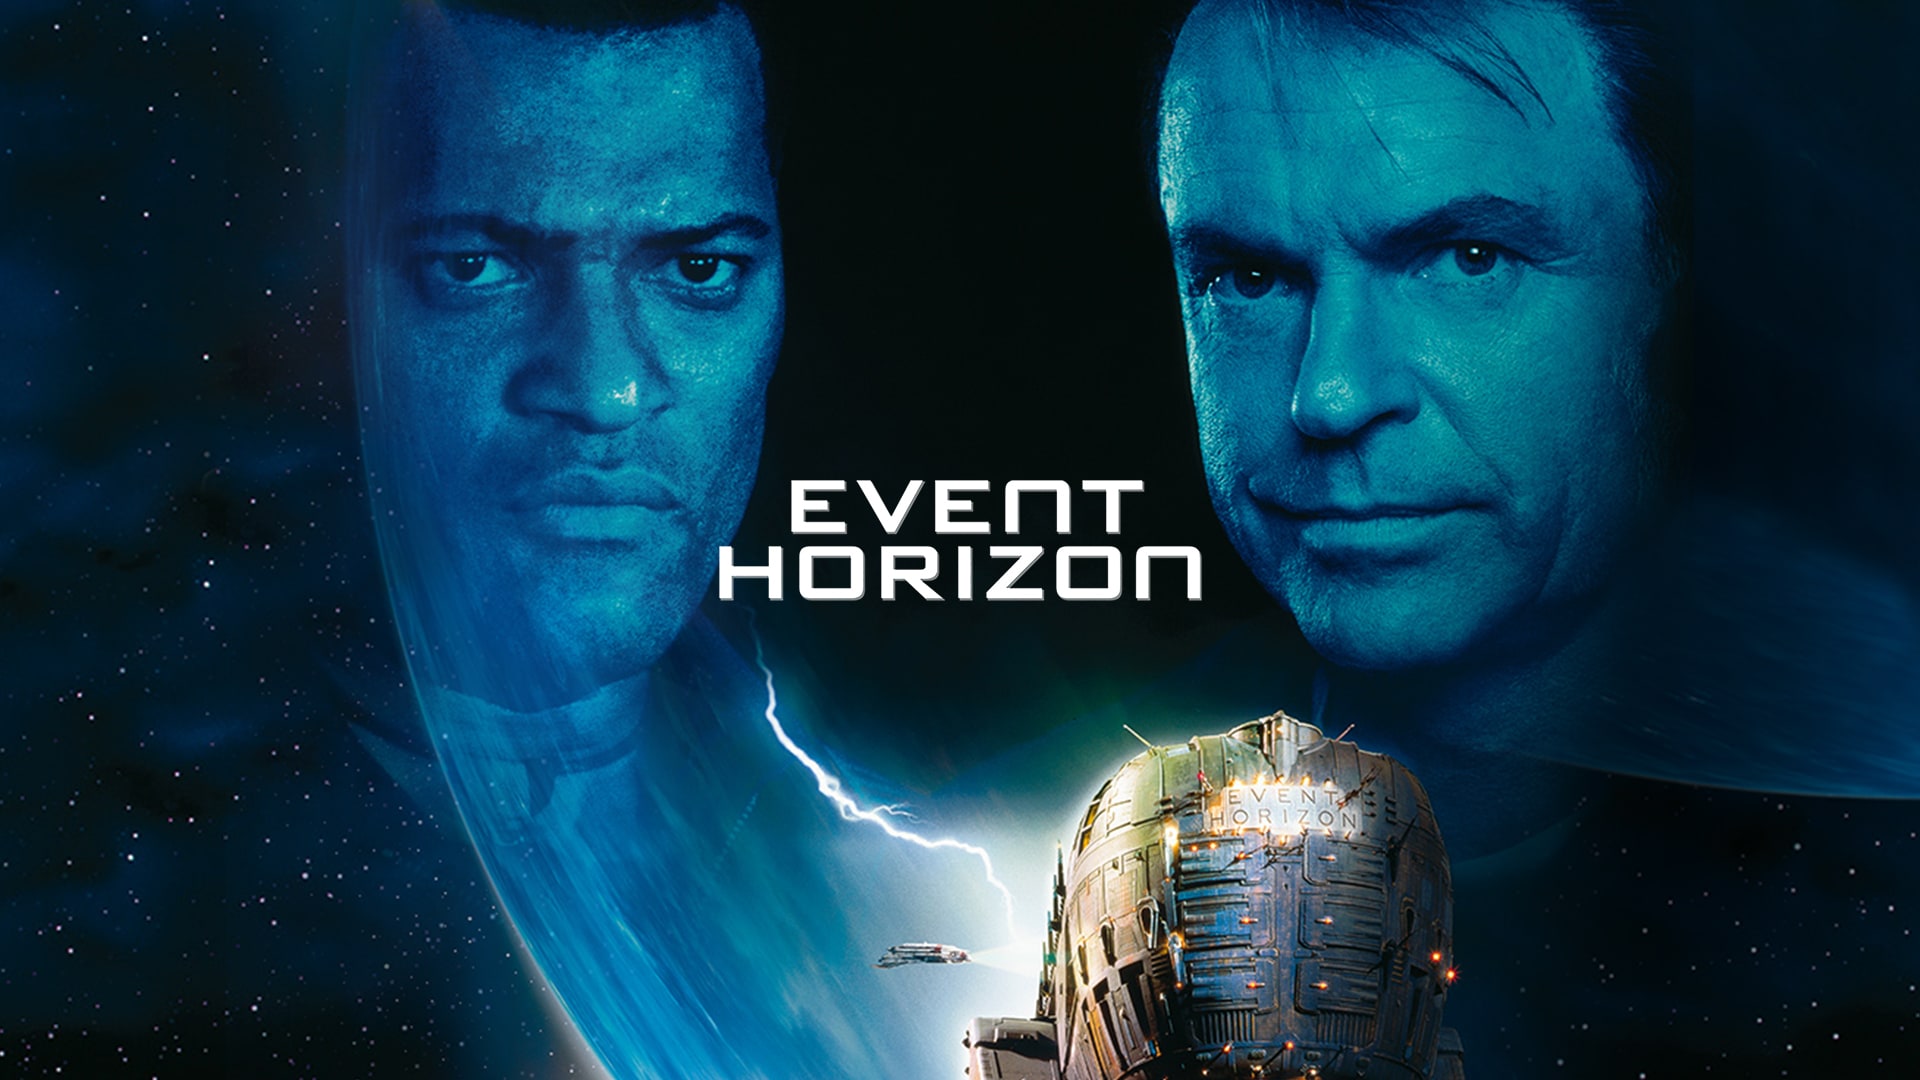 Watch Event Horizon Online | Stream Full Movies